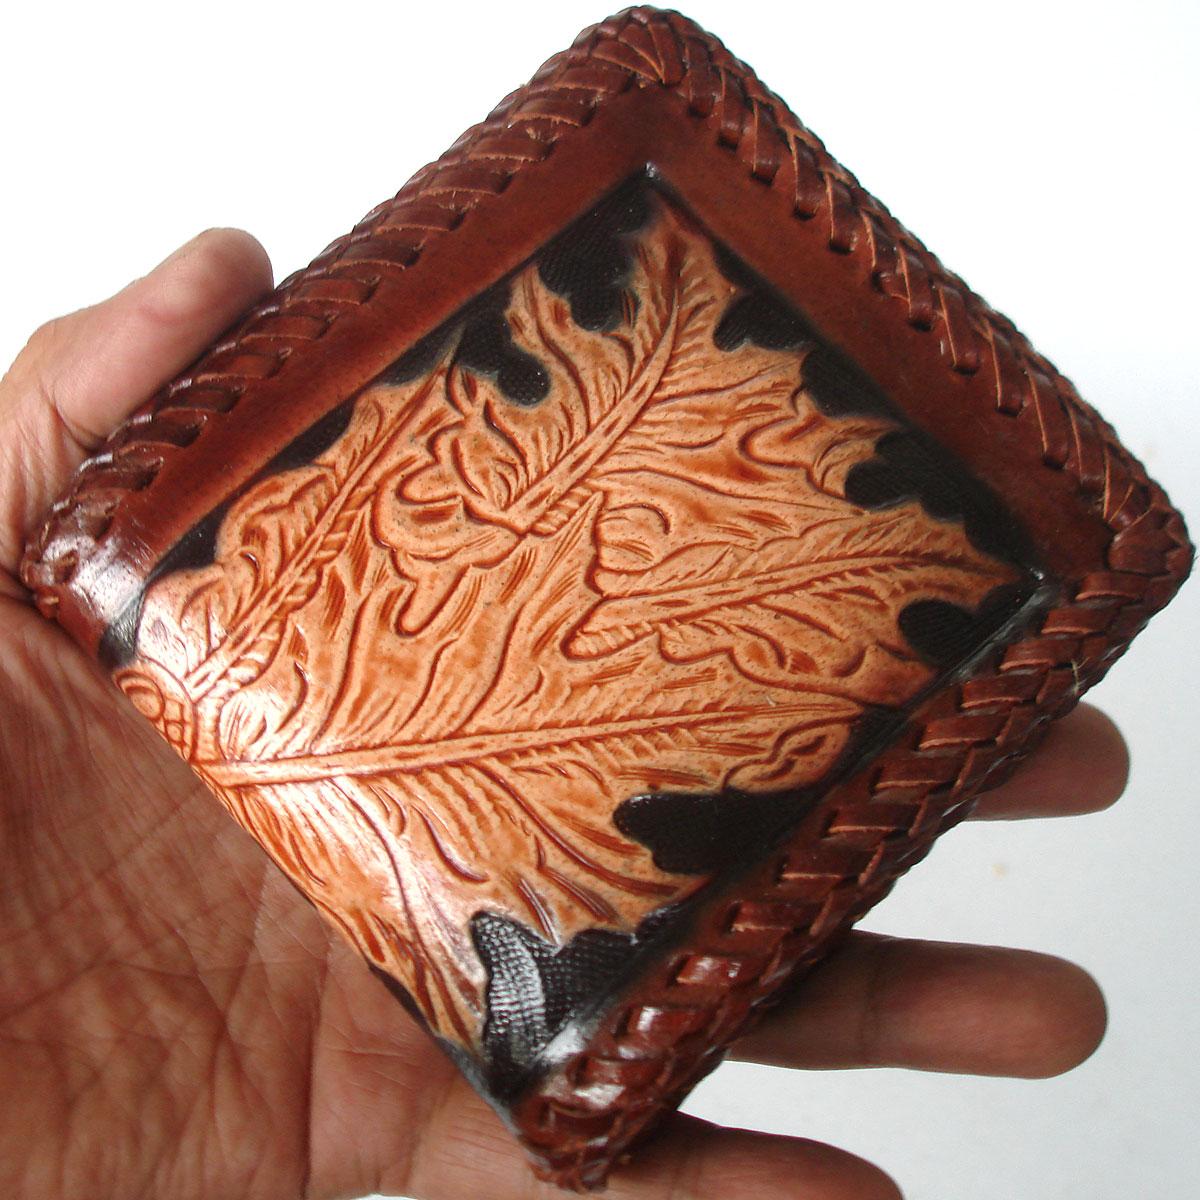 You Link   Beautiful Genuine leather bifold wallet size 4.1 x 4.5 inches กระเป๋าหนังแท้ๆ แบบเท่ๆ สไตล์คาวบอย วินเทจ โดยรอบกระเป๋า เย็บรอบด้วยหนังถักทำมือ มีสเน่ห์มาก ม้าเมิน